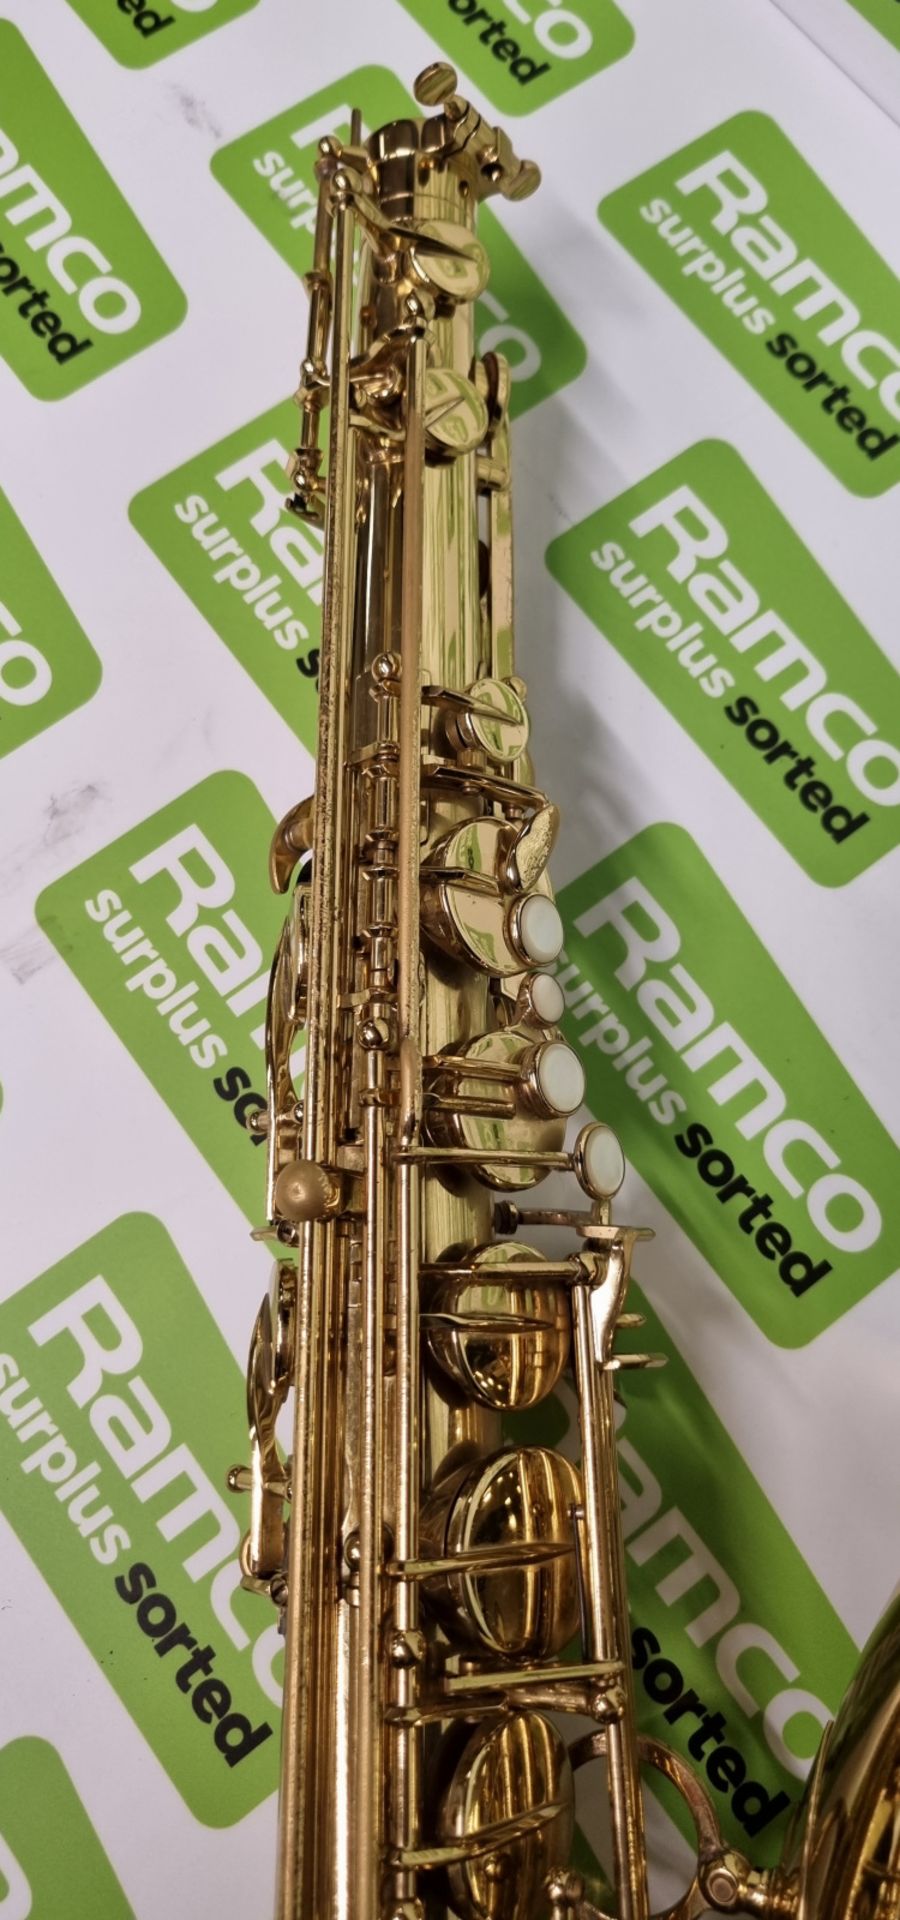 Henri Selmer 80 Super Action Serie ll saxophone in Henri Selmer case - serial number: 702272 - Image 5 of 26